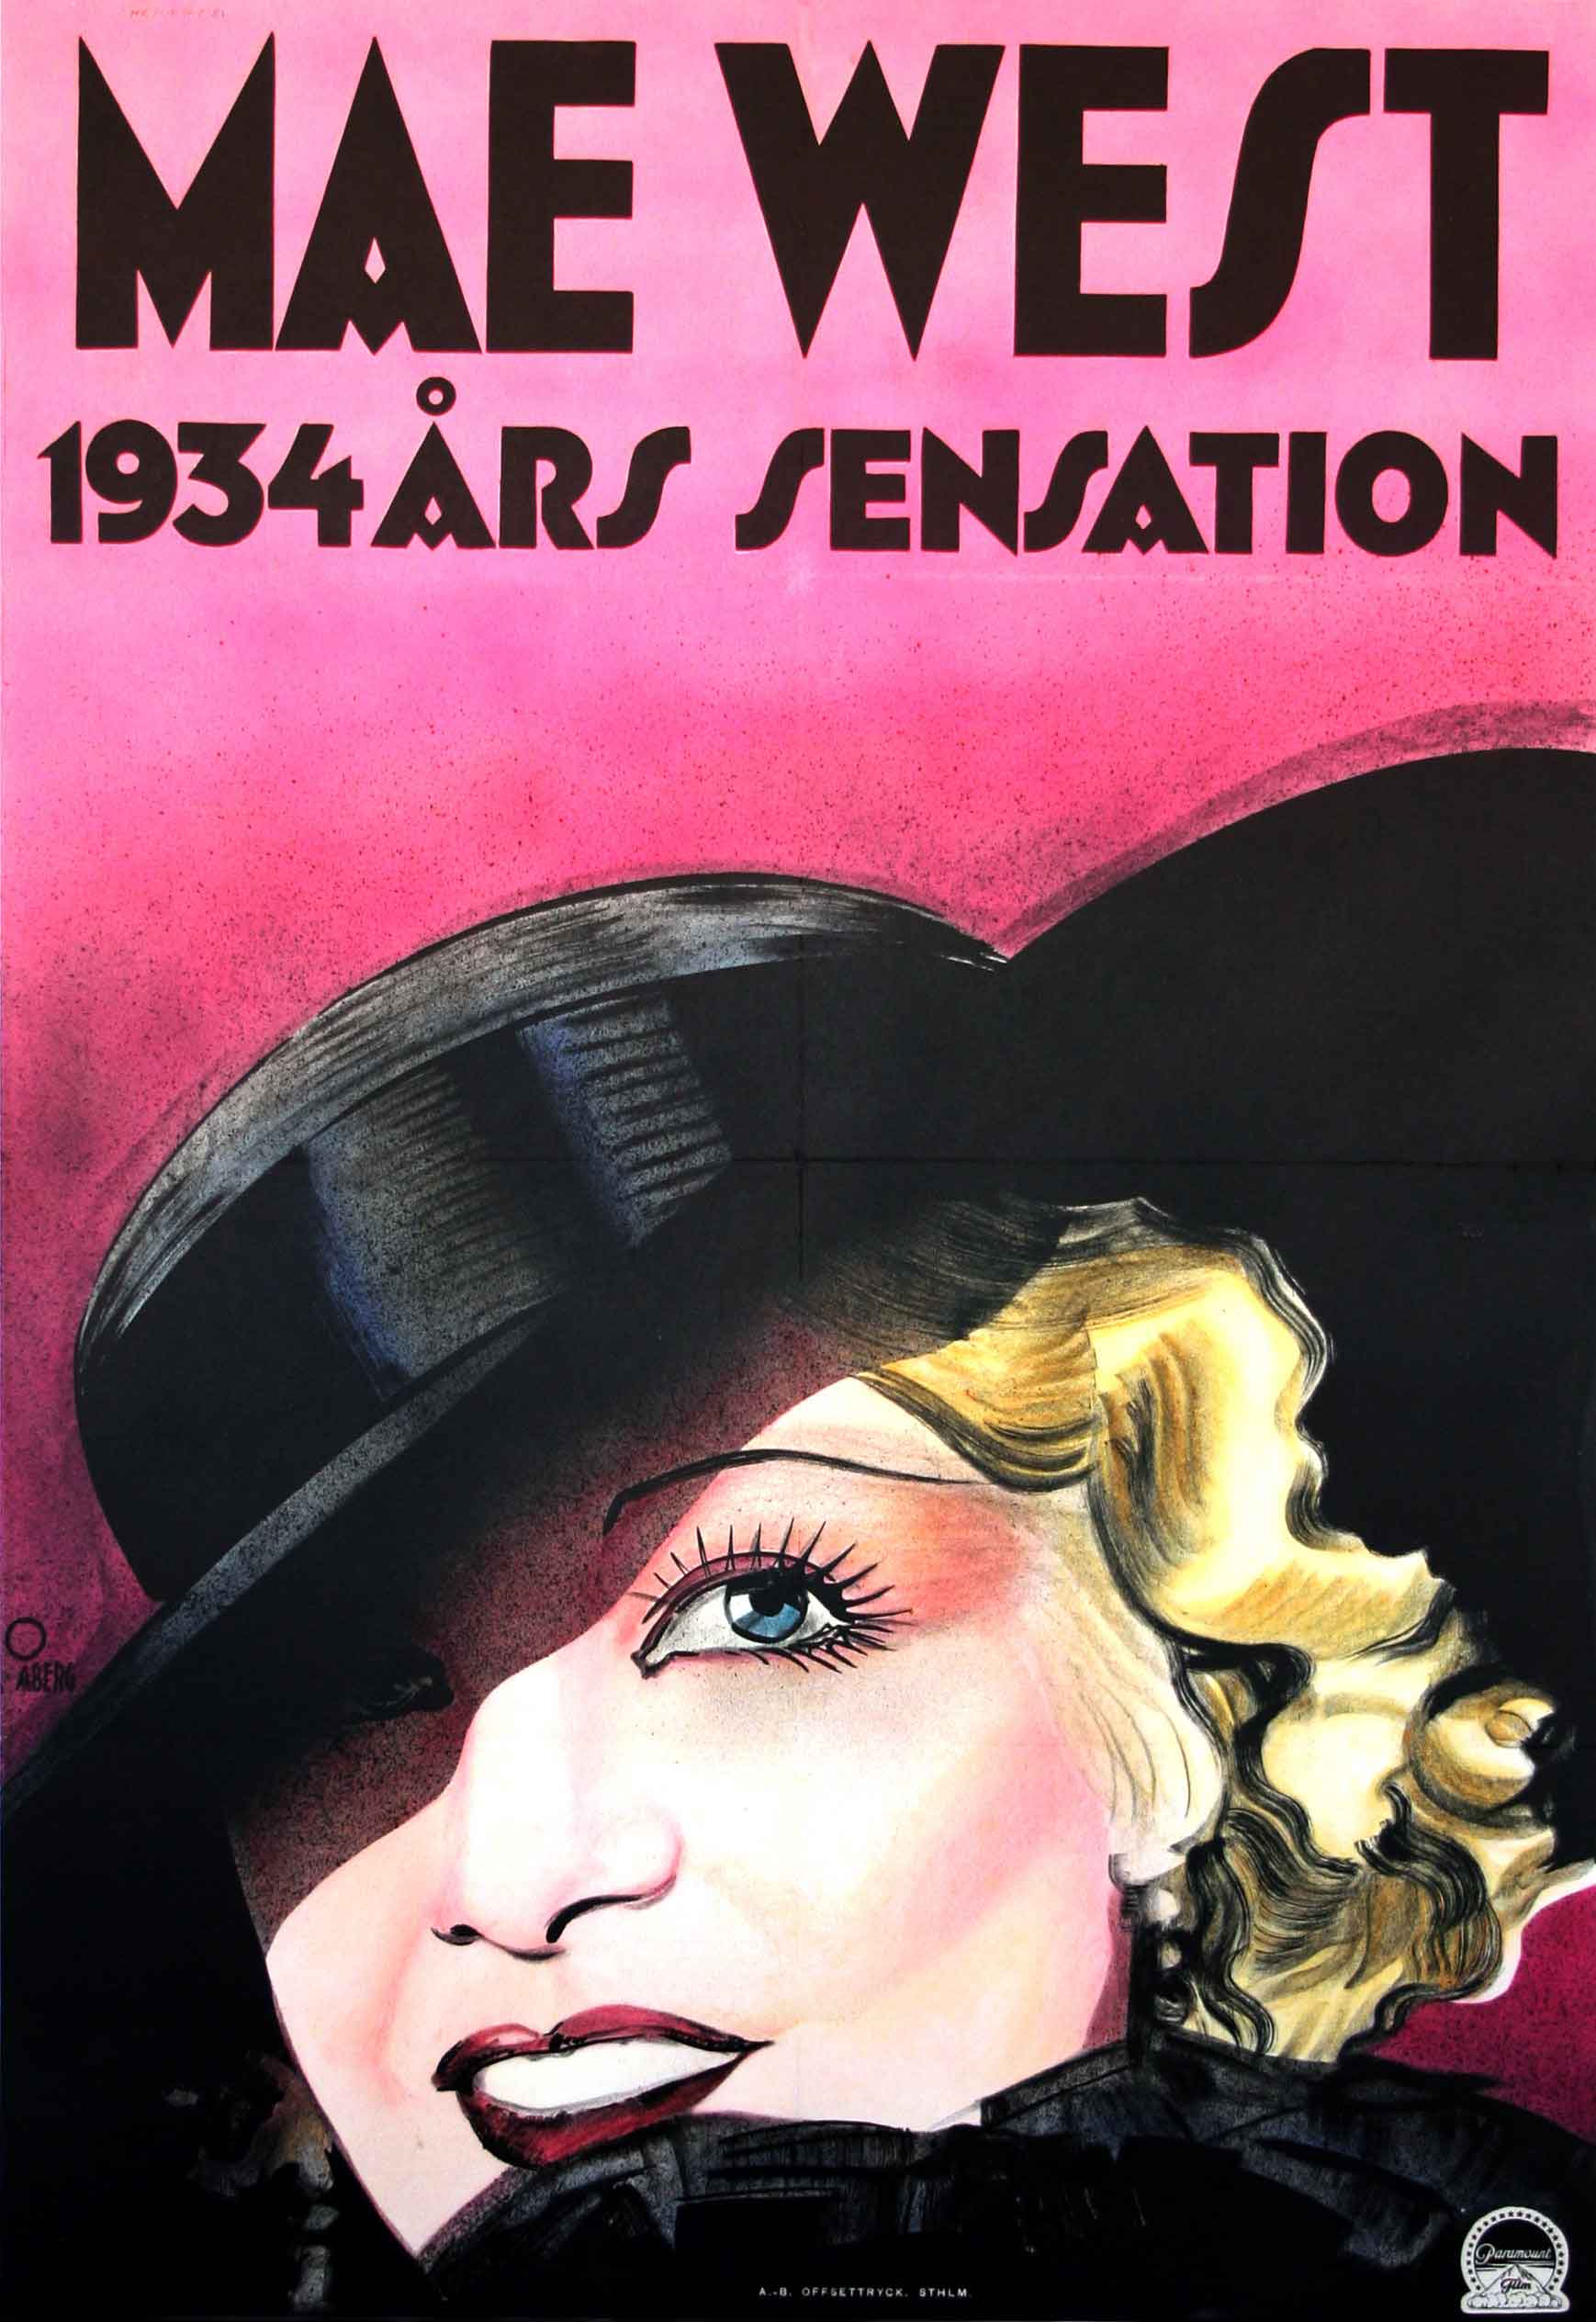 1934 ARS SENSATION